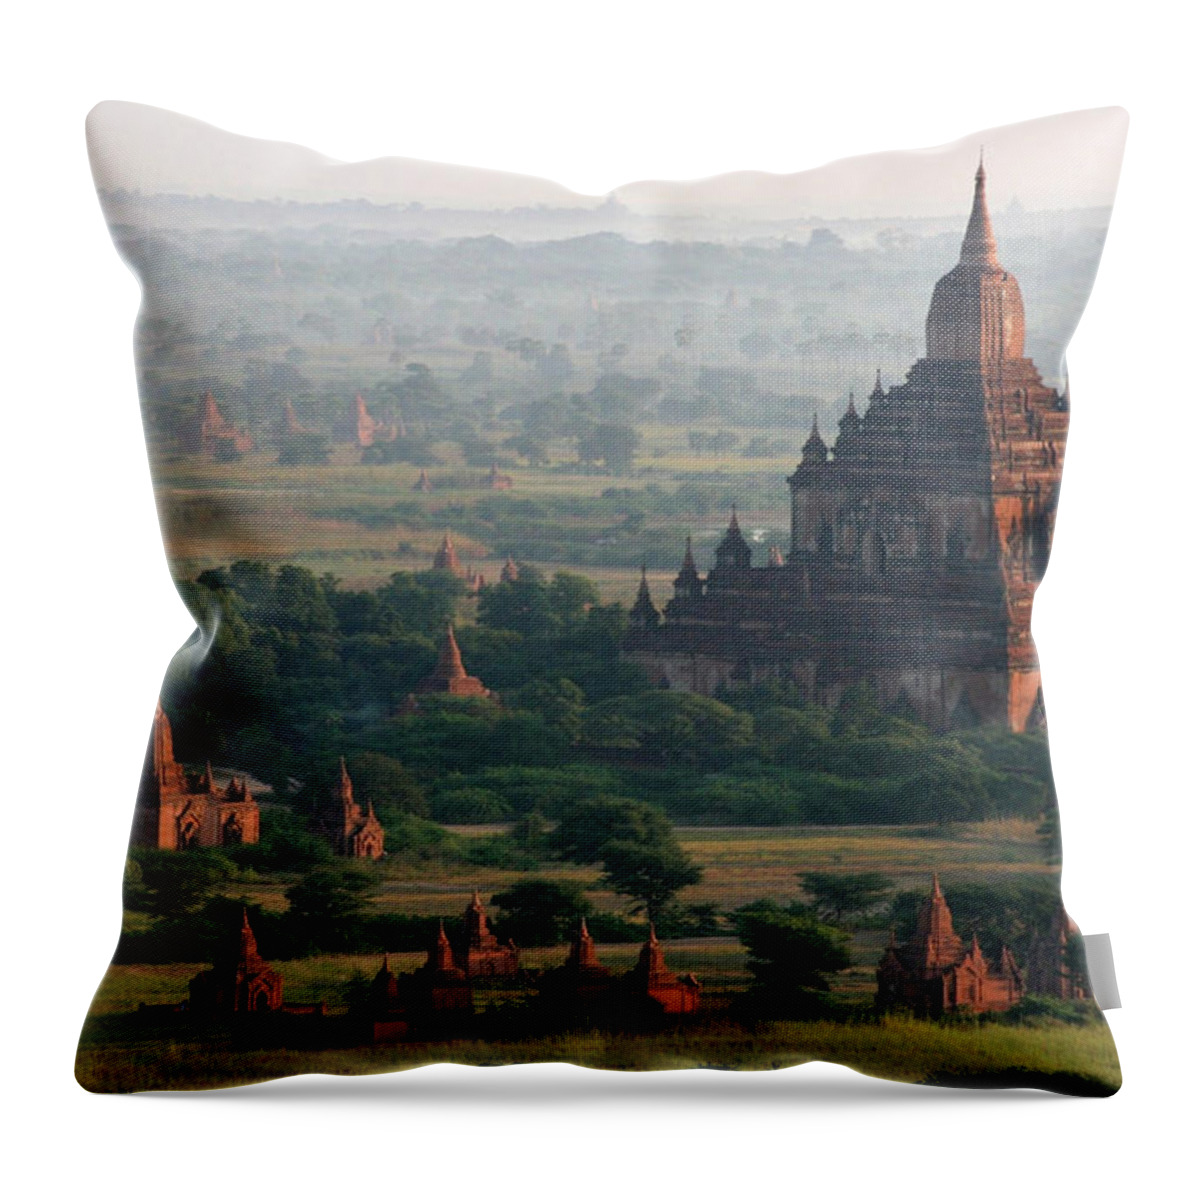 Tranquility Throw Pillow featuring the photograph Sulamani, Bagan, Burma #1 by Joe & Clair Carnegie / Libyan Soup